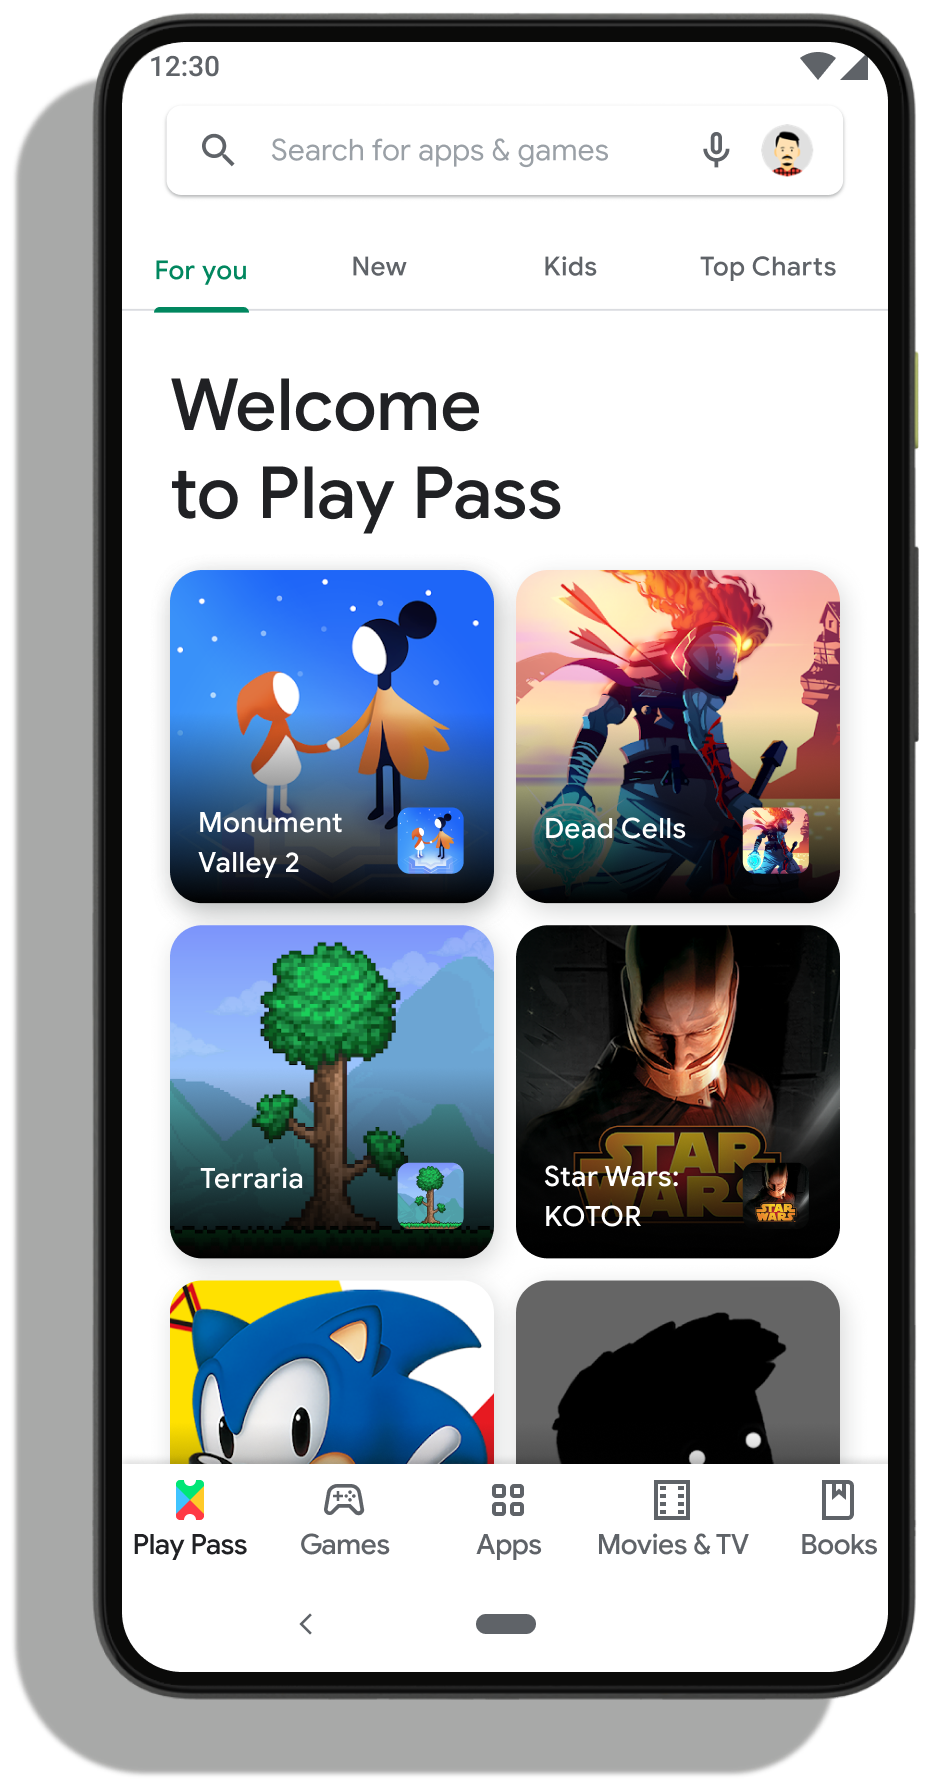 PlayPlus – Apps on Google Play